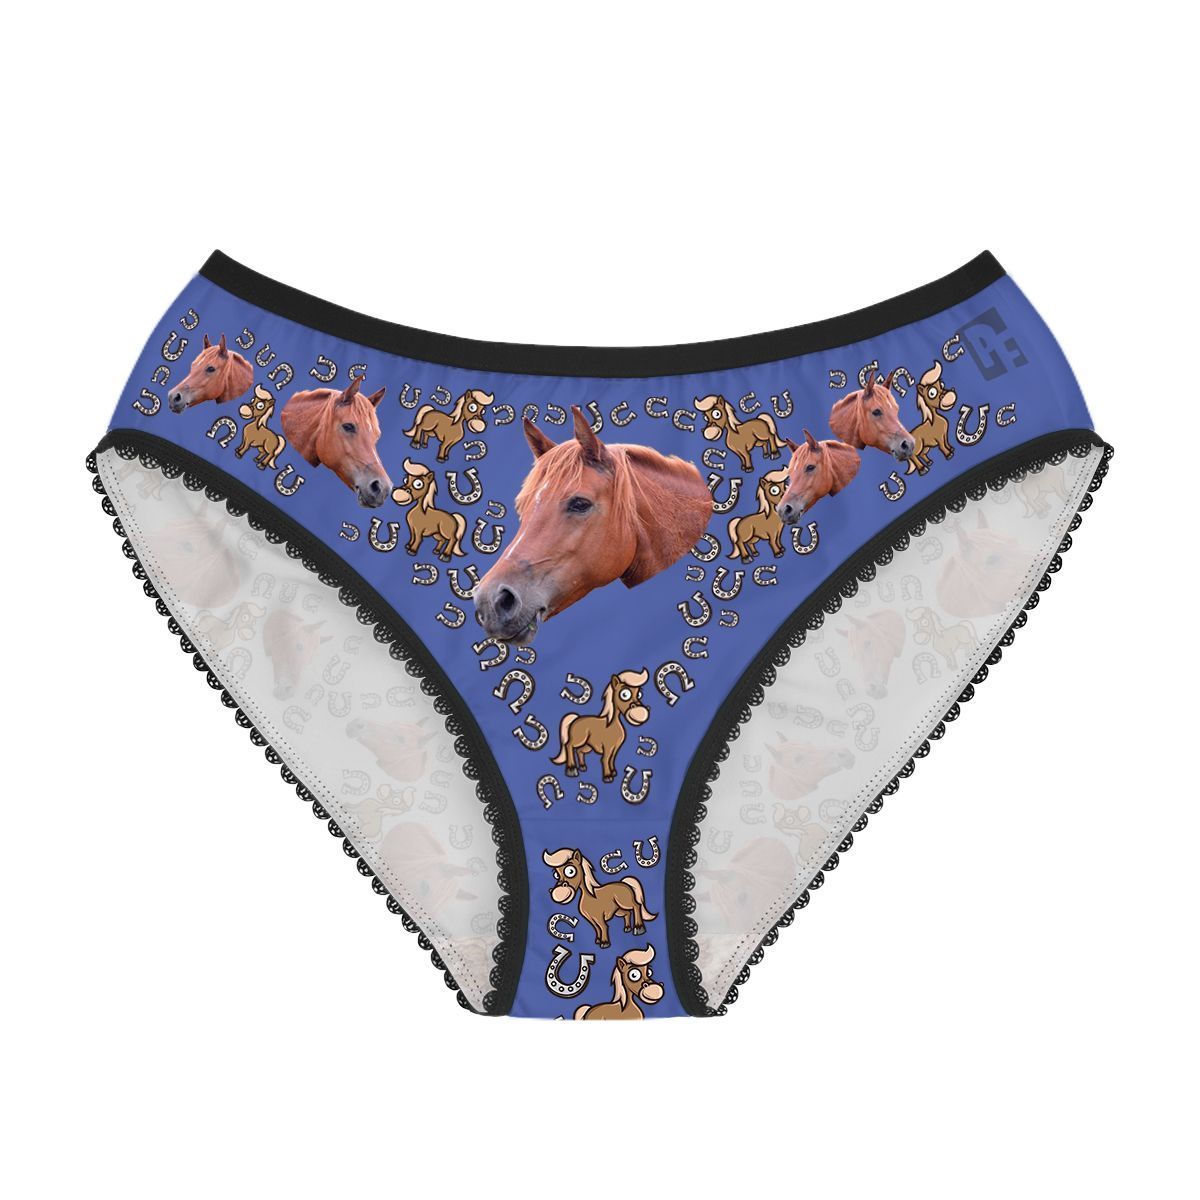 Darkblue Horse women's underwear briefs personalized with photo printed on them